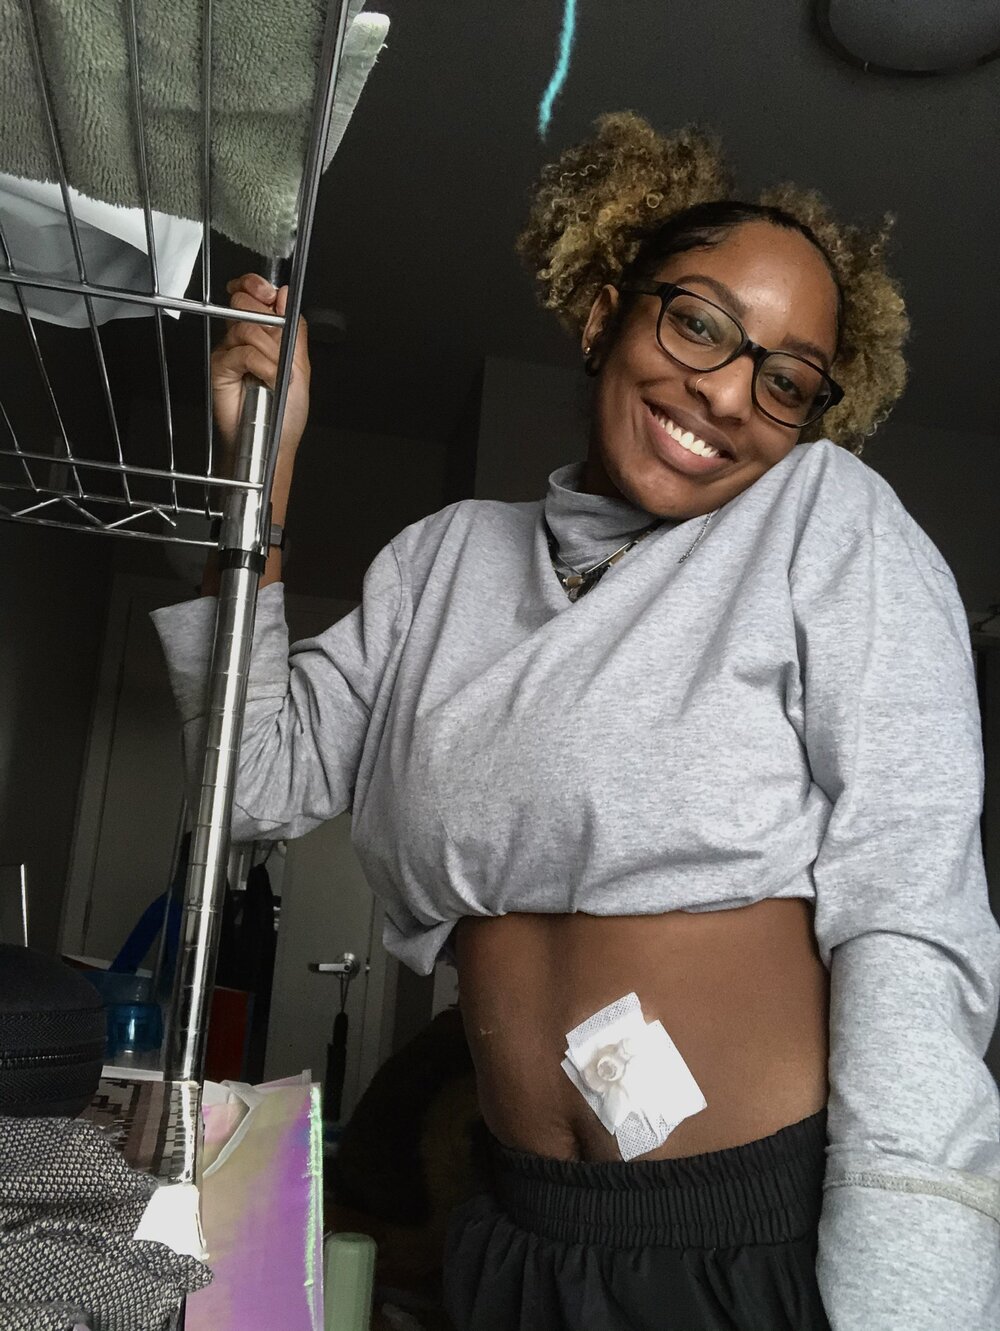 Damarius Ingram with her top pulled up to show her gastrostomy feeding tube. Photo: Damarius Ingram